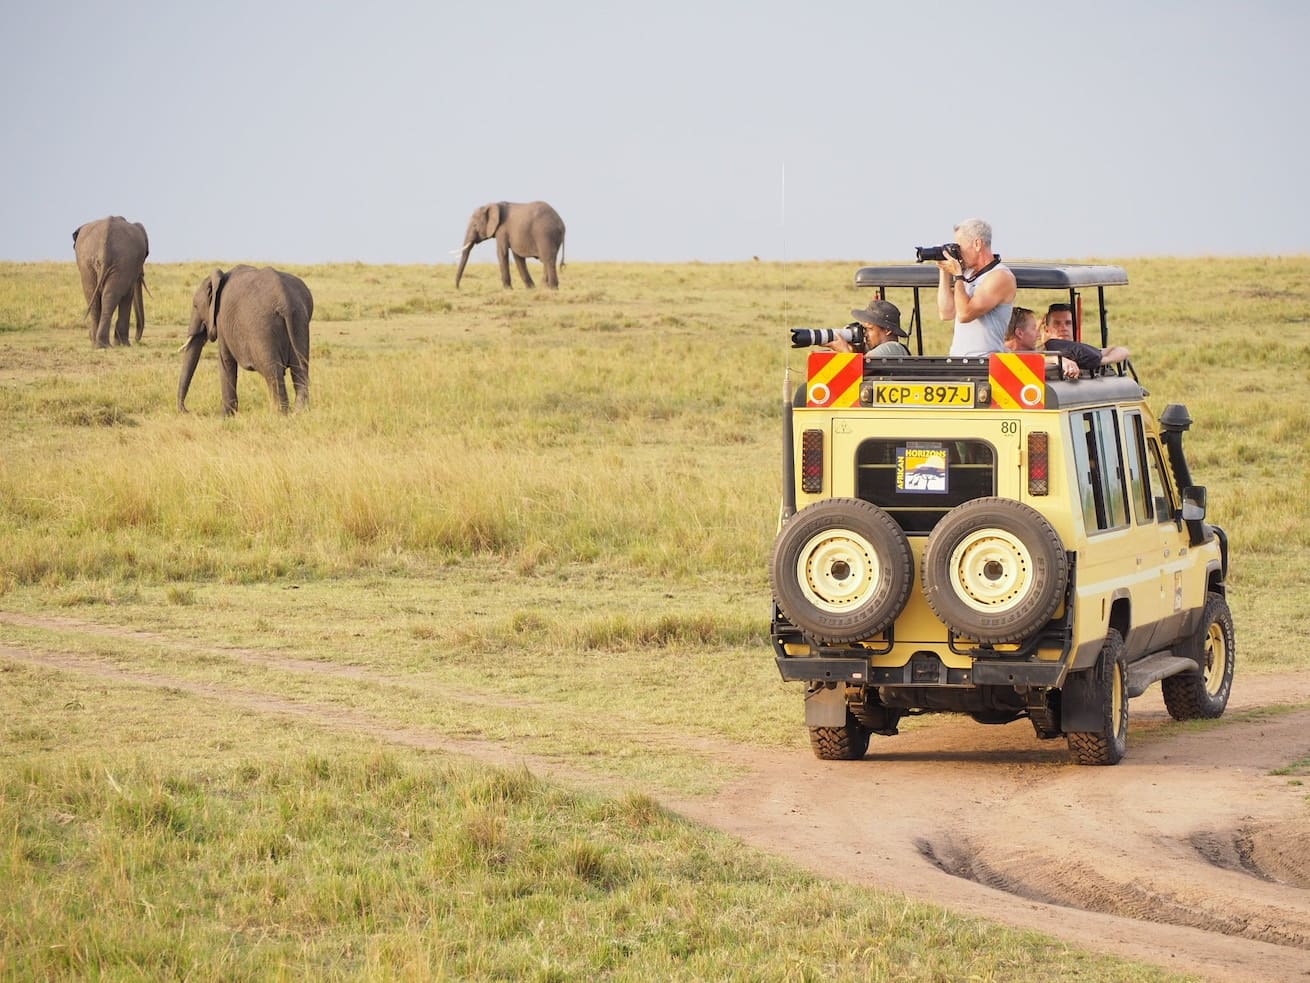 Travellers in safari jeep photograph grazing elephants.